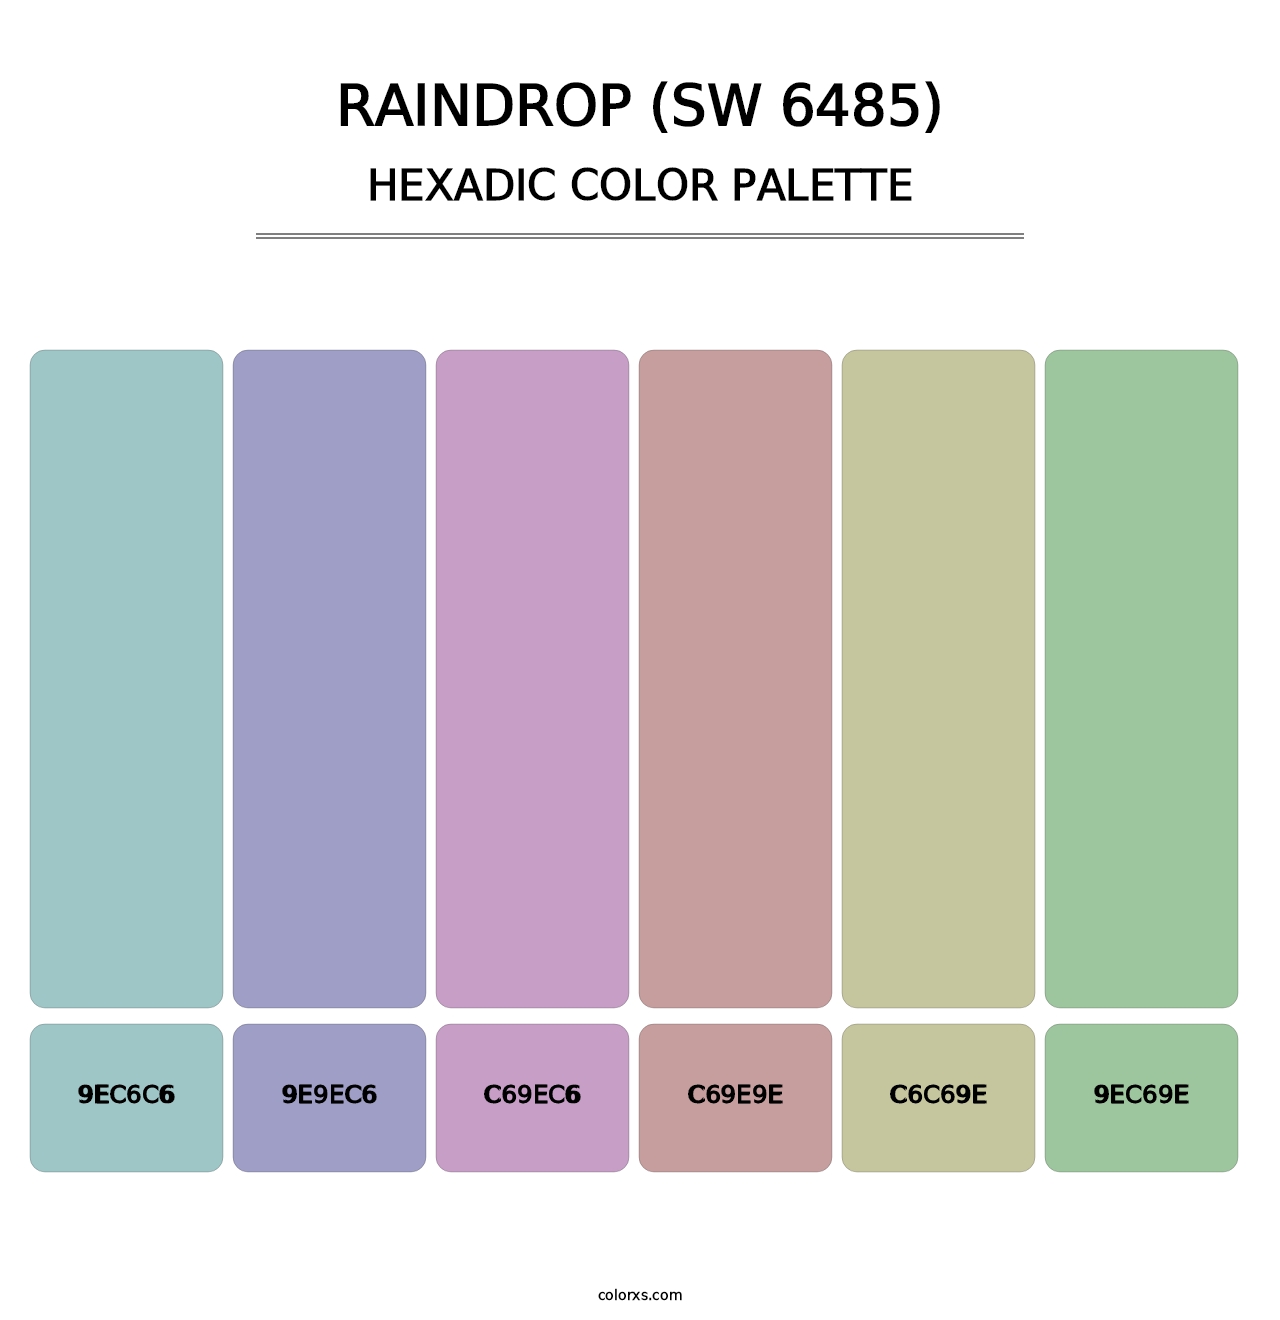 Raindrop (SW 6485) - Hexadic Color Palette